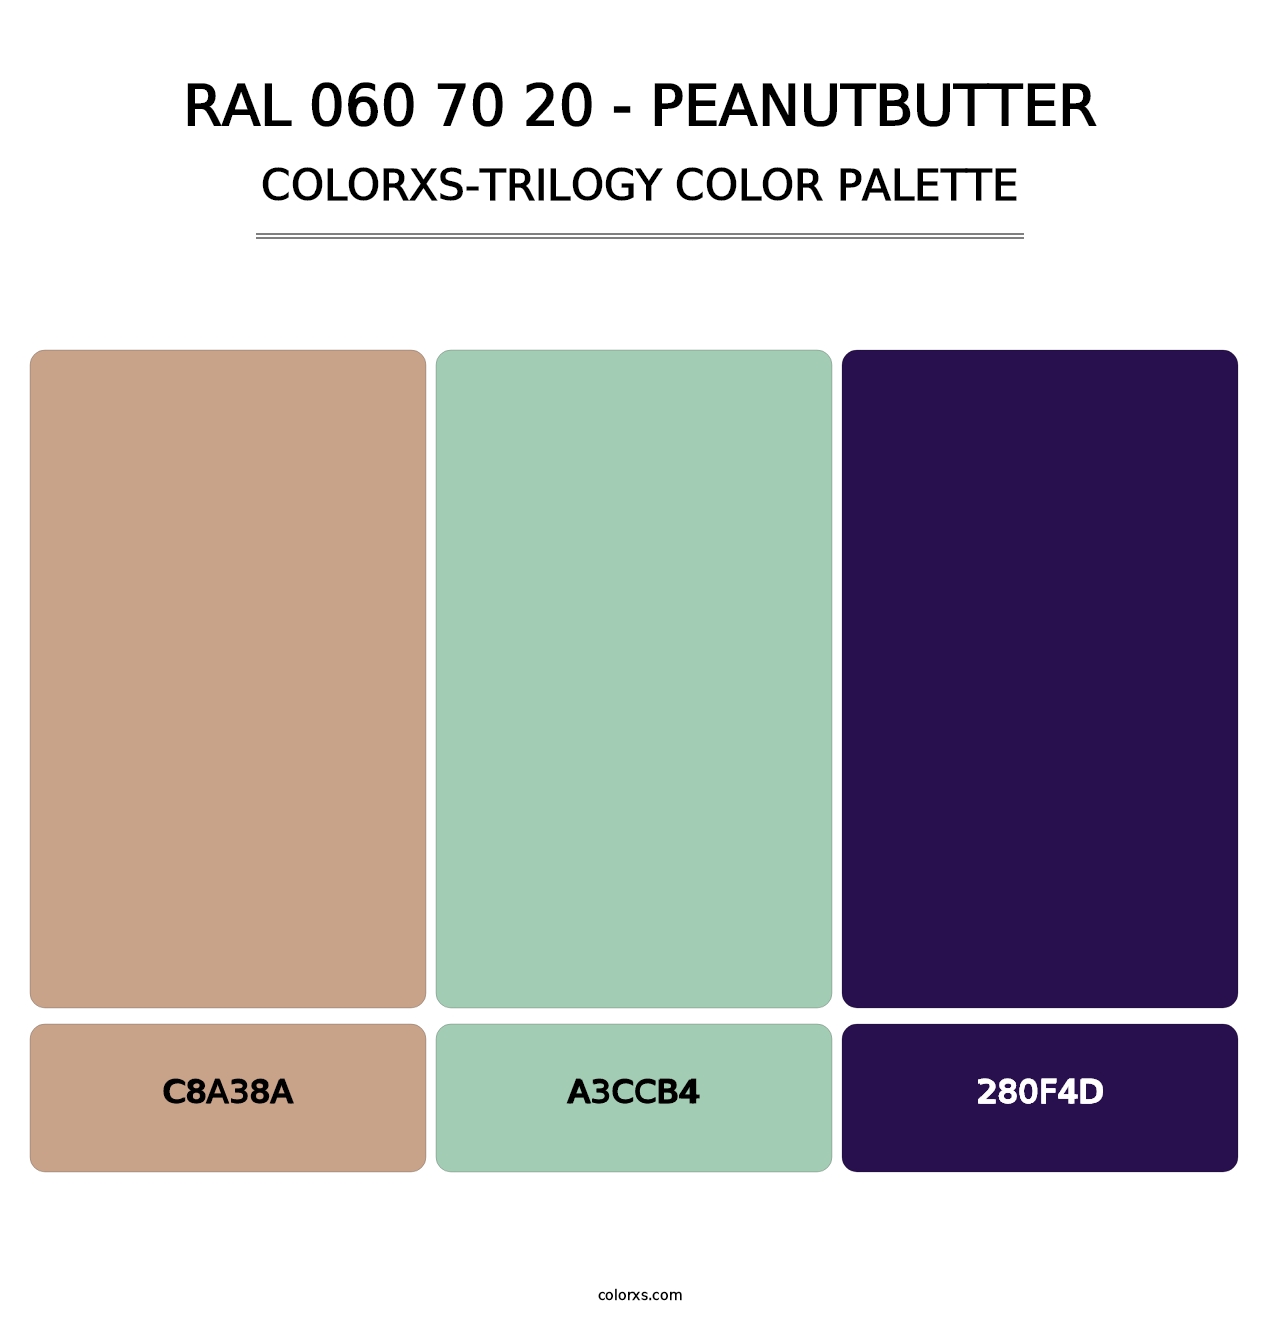 RAL 060 70 20 - Peanutbutter - Colorxs Trilogy Palette